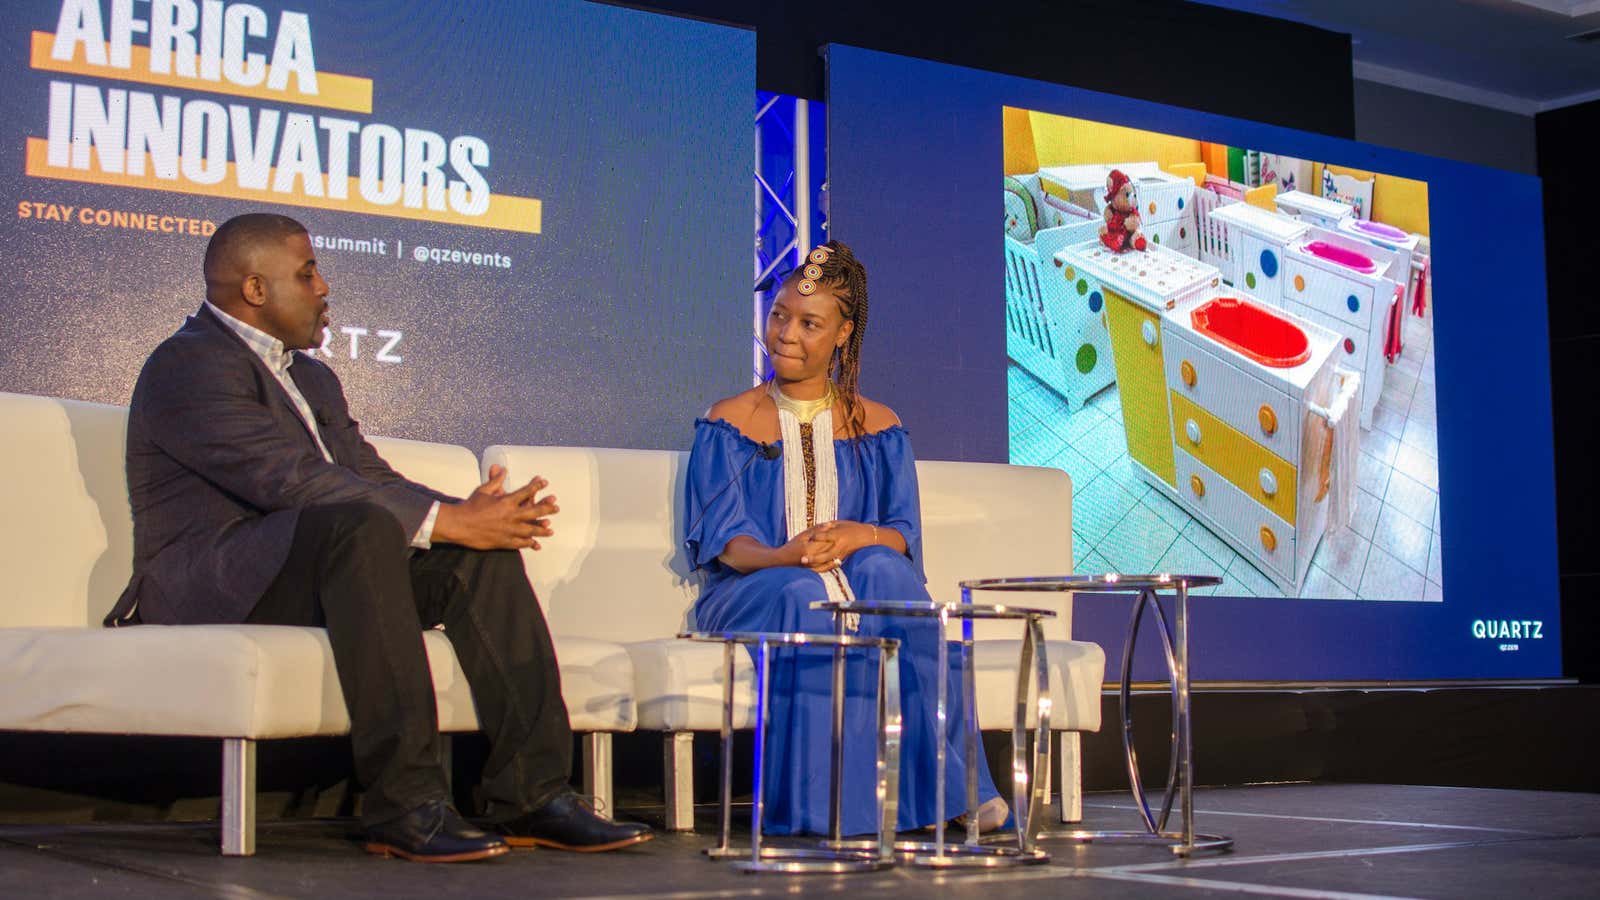 Making noise at the Quartz Africa Innovators summit.